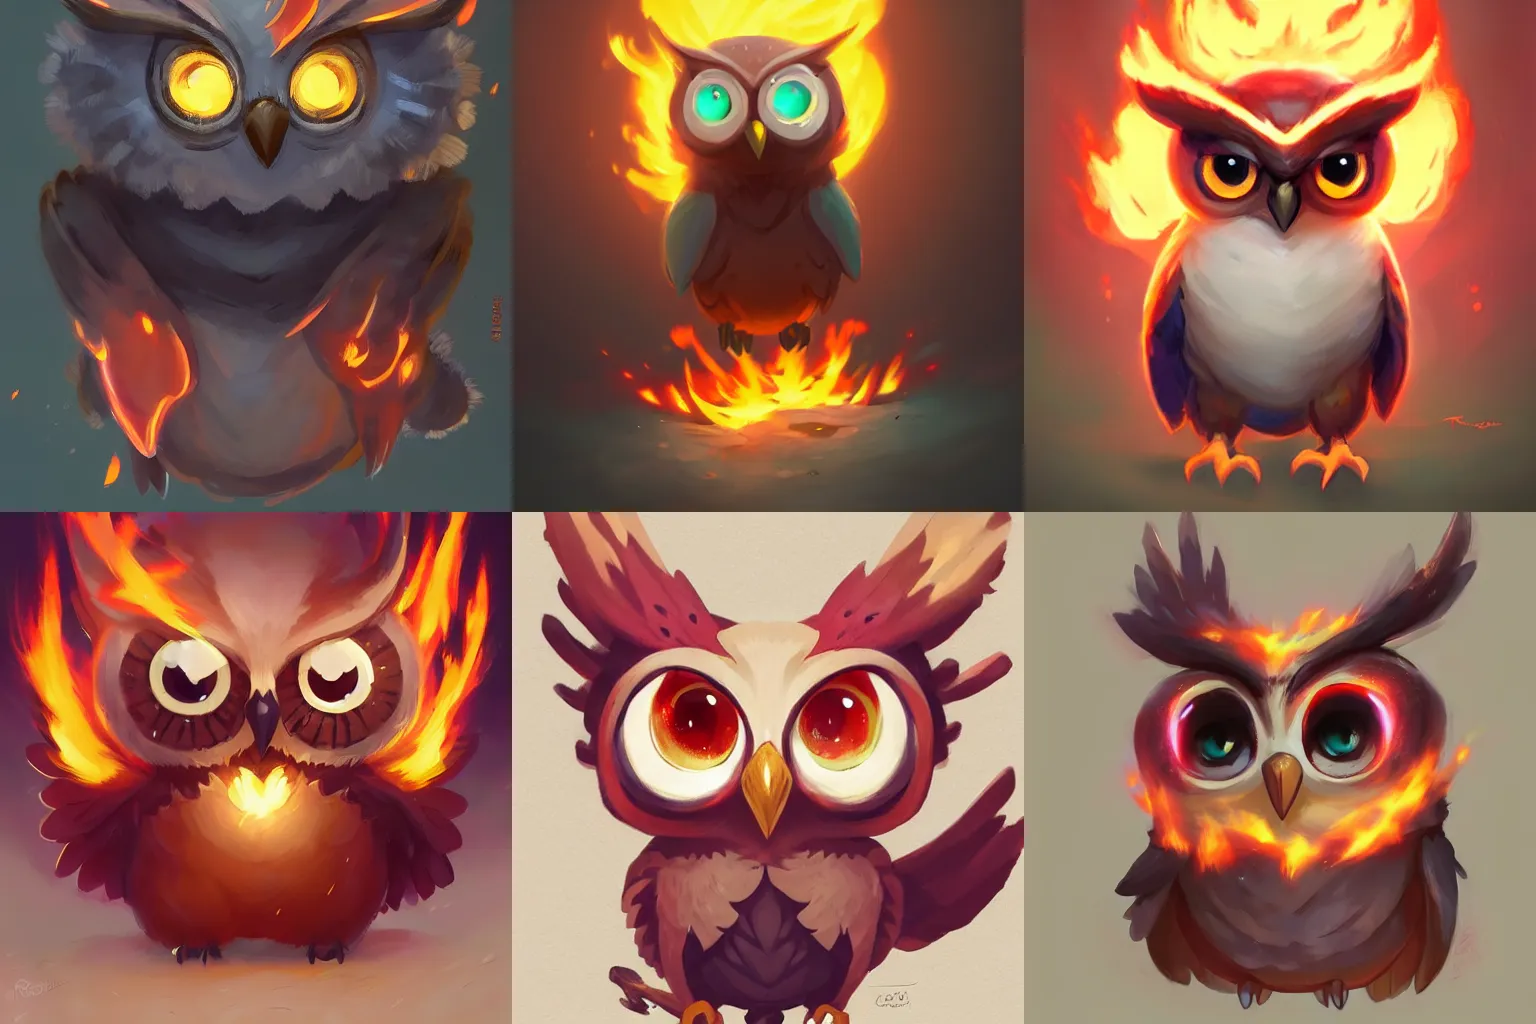 Prompt: full shot,a cute owl Pokémon with big eyes made of flame,Greg Rutkowski,Zatzka, Hans,trending on artstation, High detail